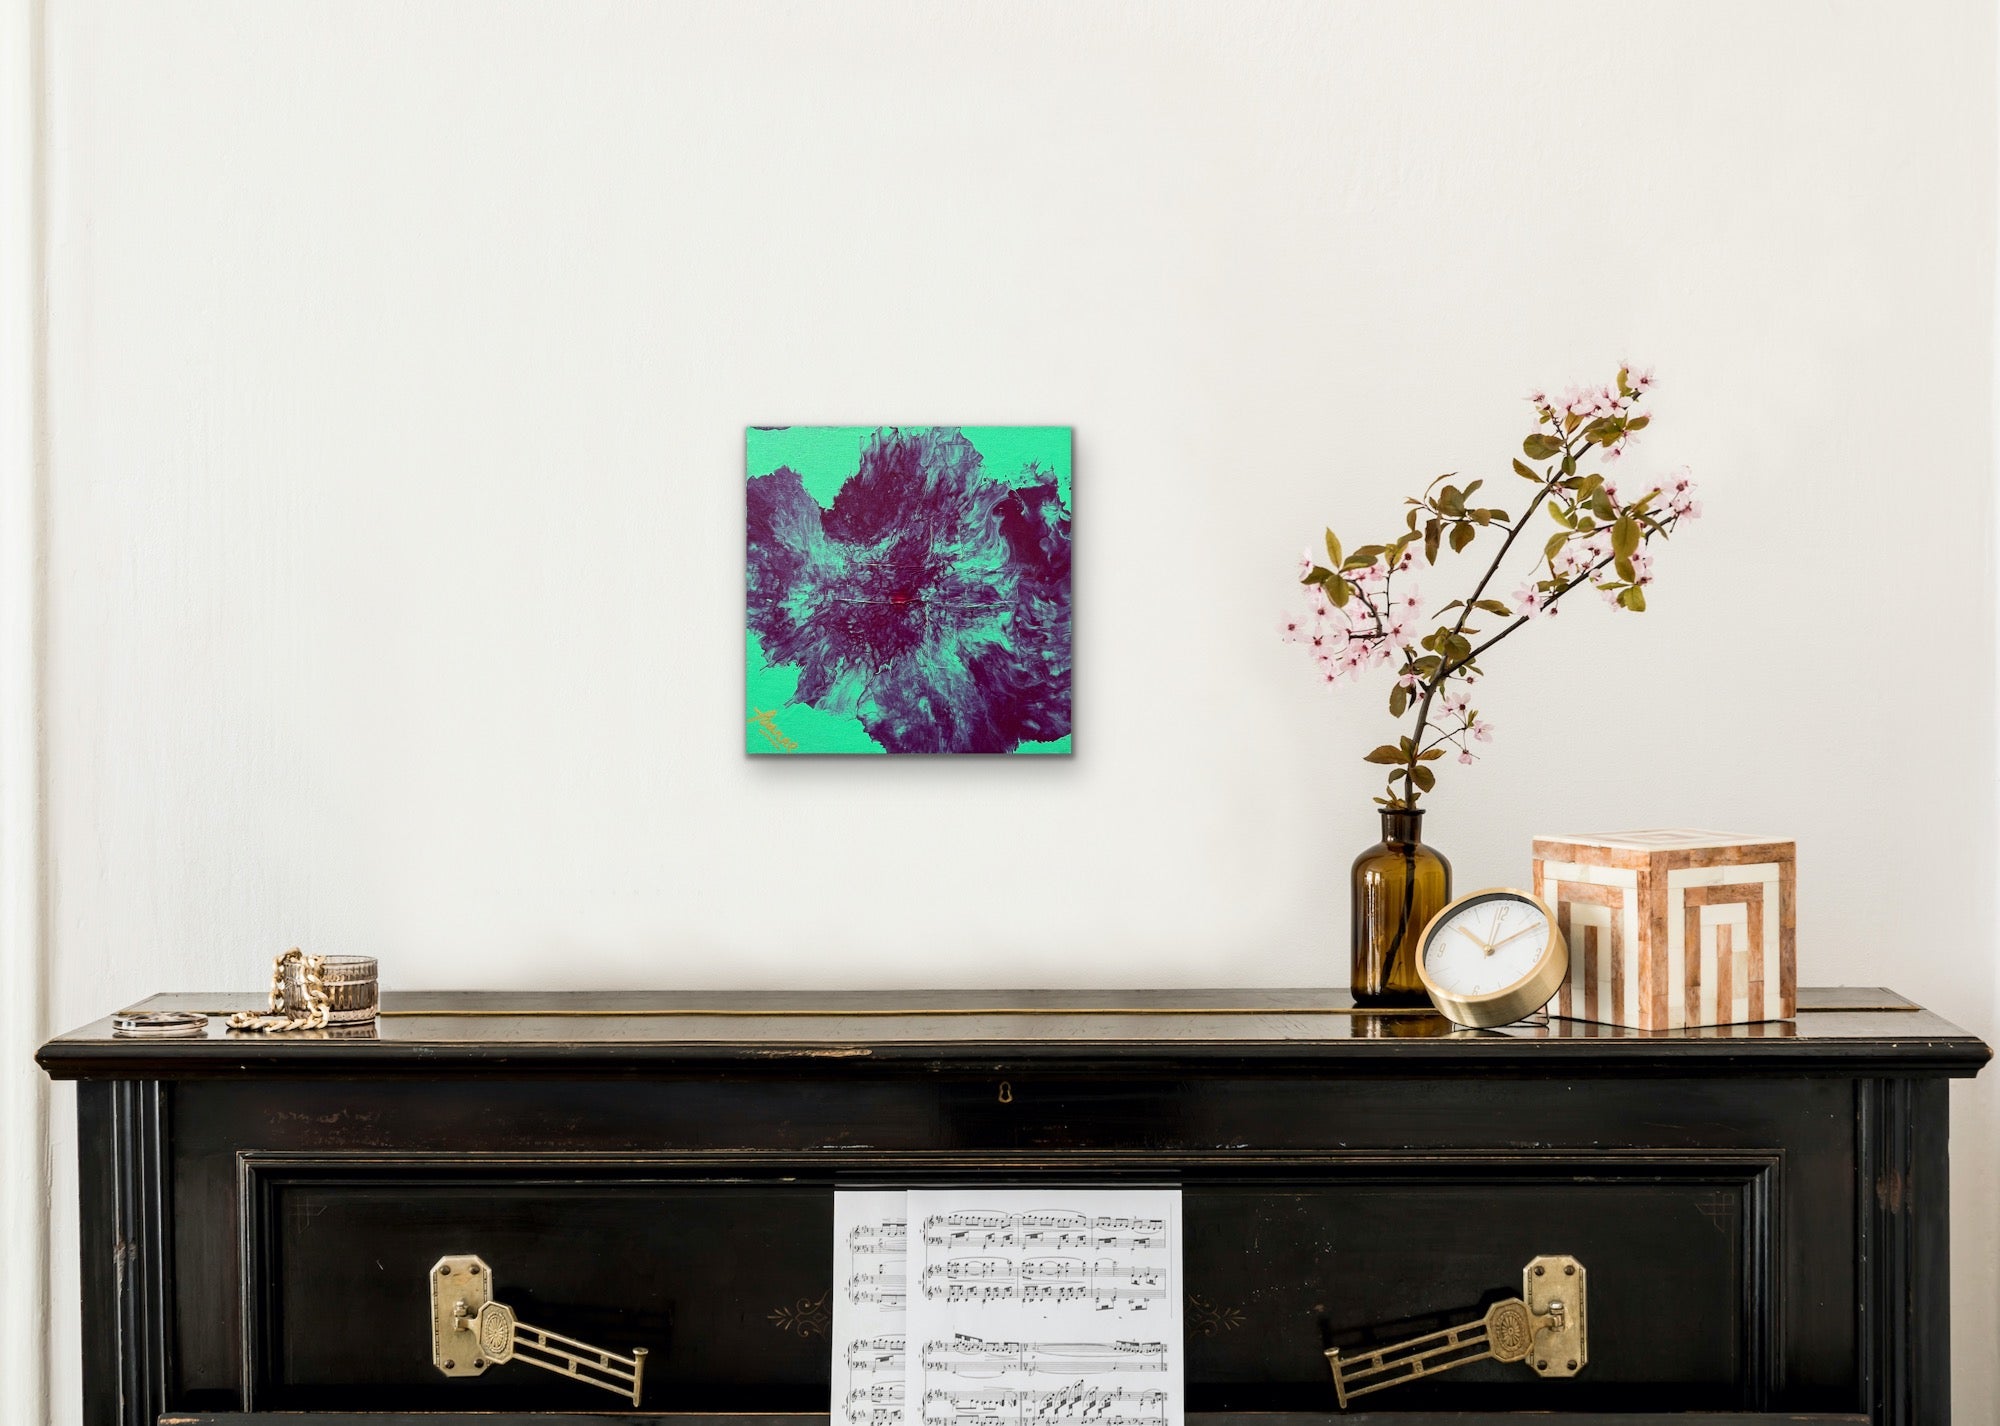 Misty Neon Galaxy No.1 (30 cm x 30 cm) Purple Aqua Abstract Painting by Joanne Daniel